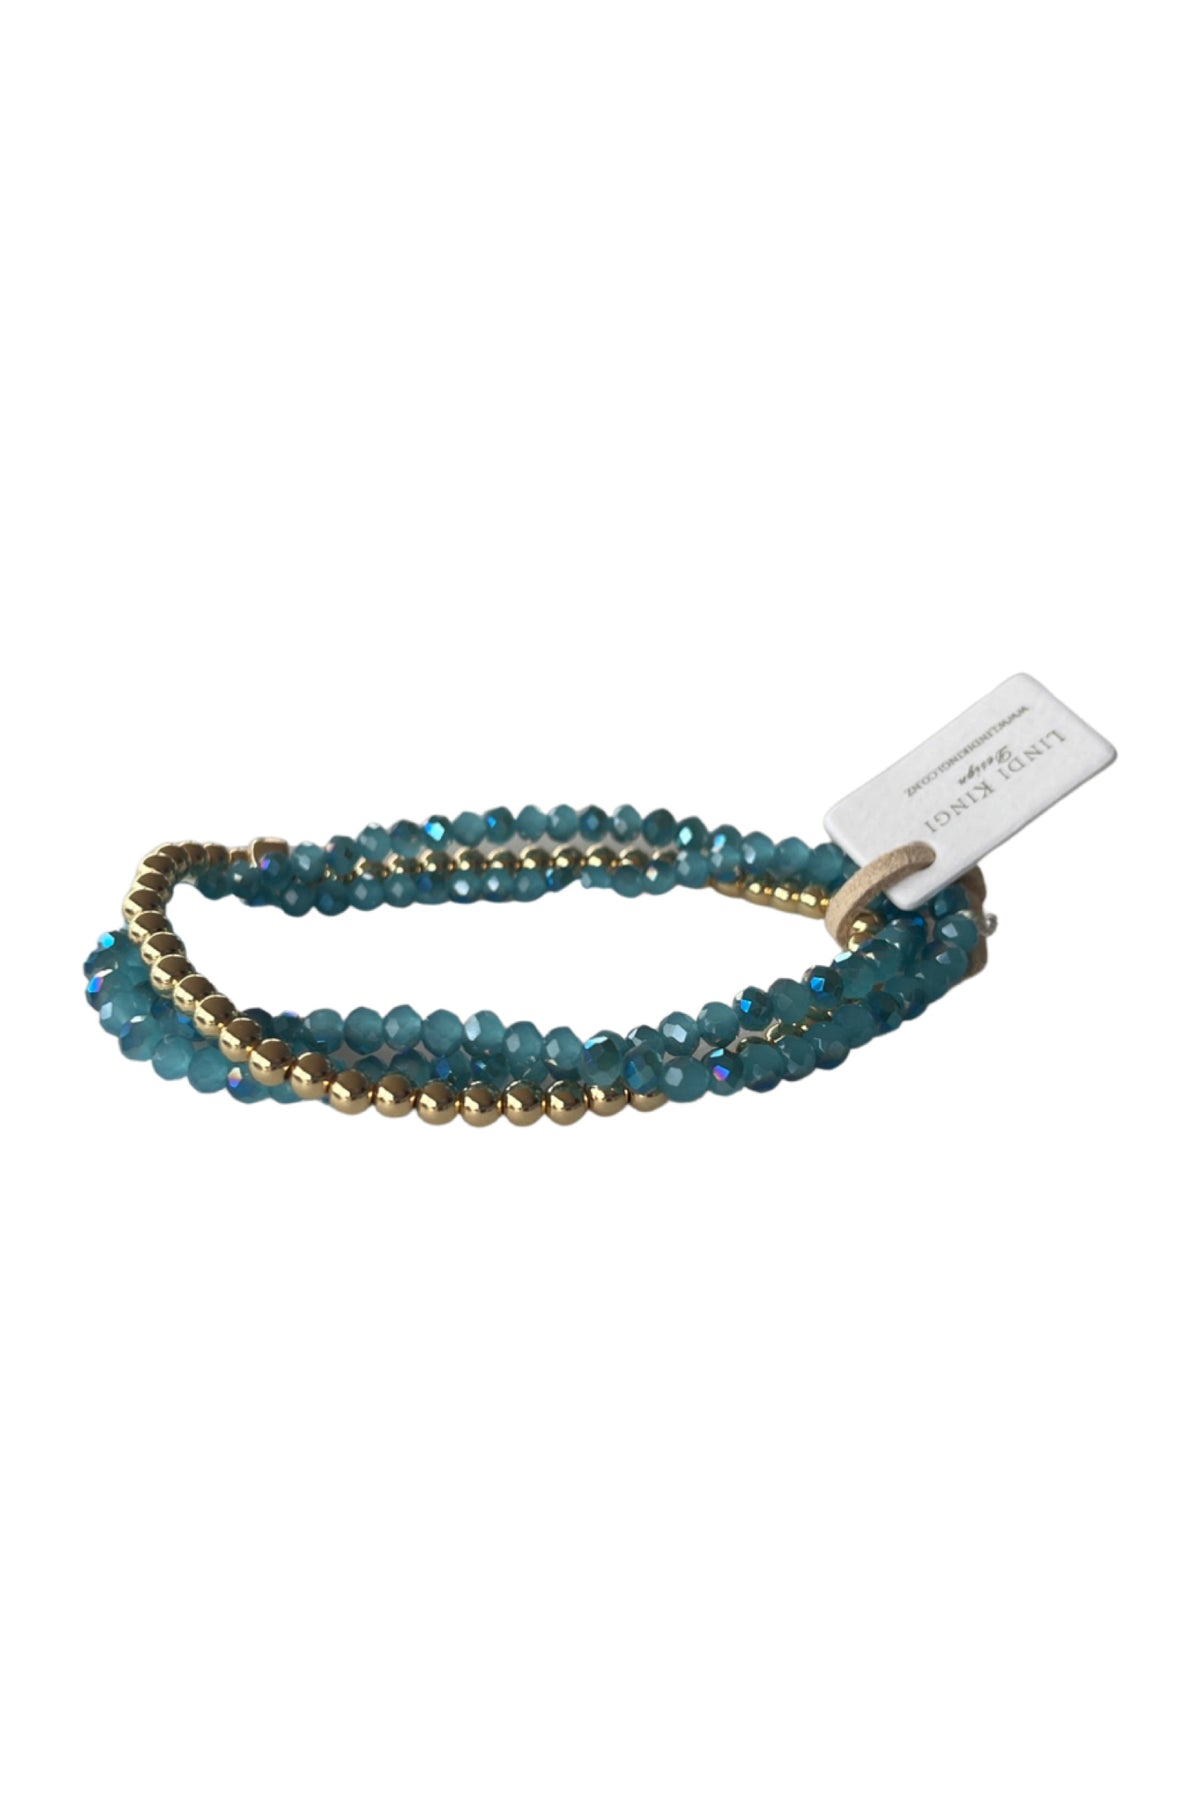 Iridescent Blue and Gold 4mm Beaded Bracelet Set